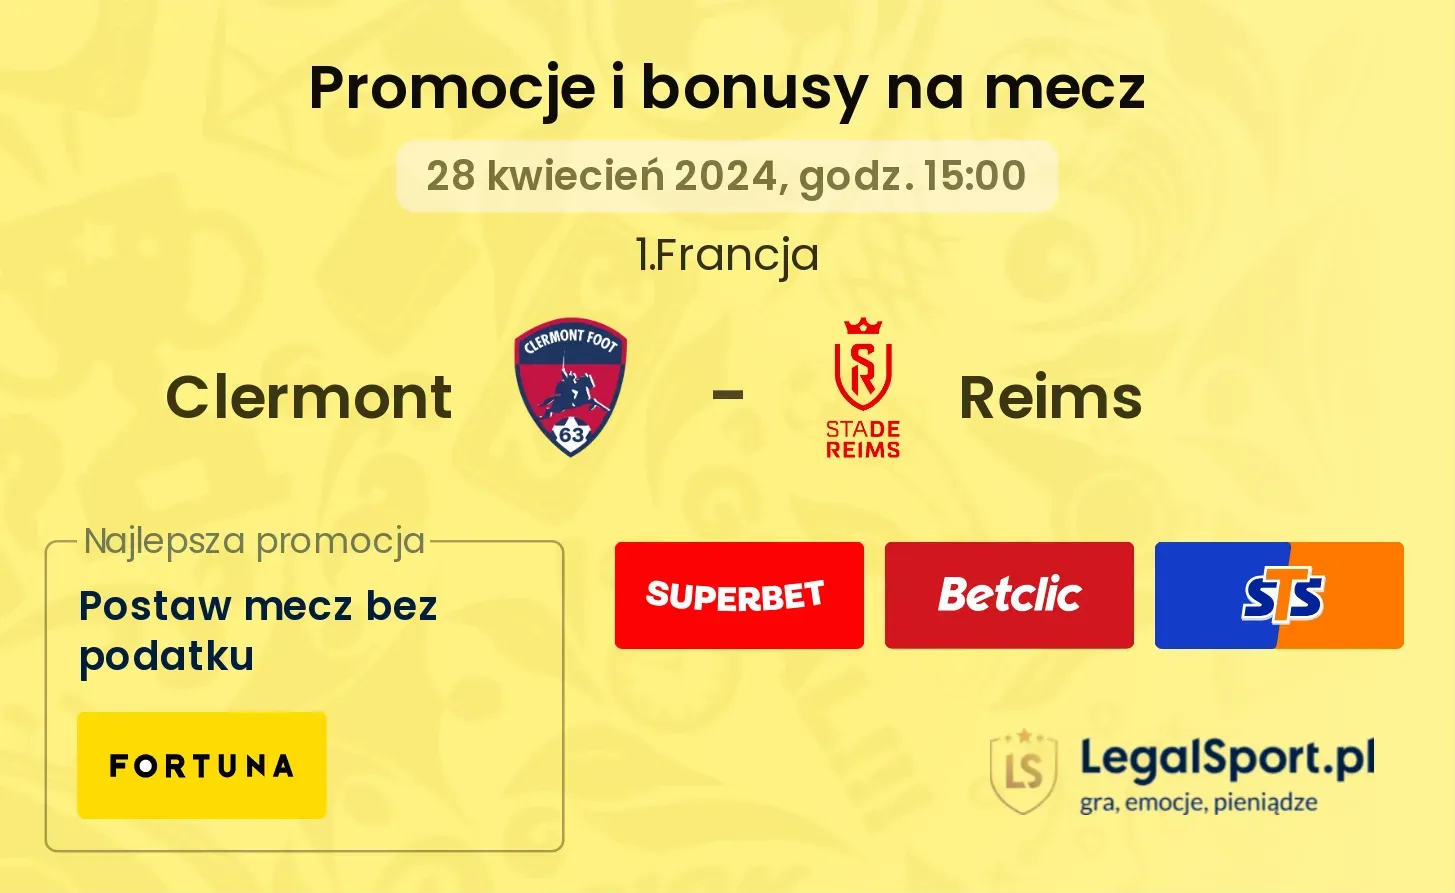 Clermont - Reims promocje bonusy na mecz